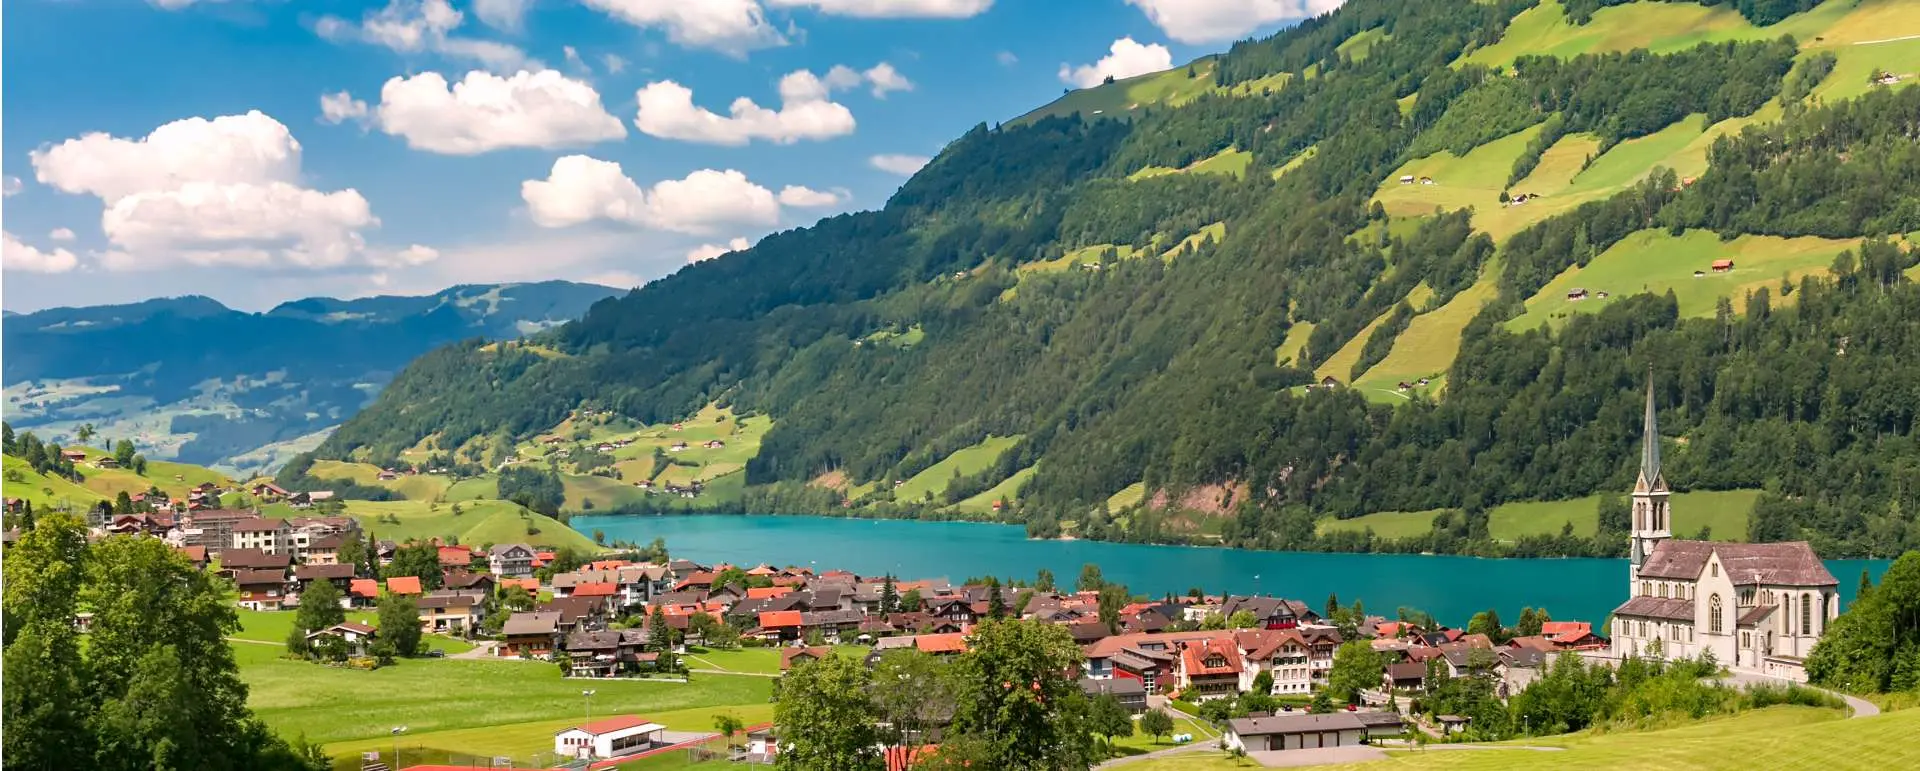 Obwalden - the destination for school trips